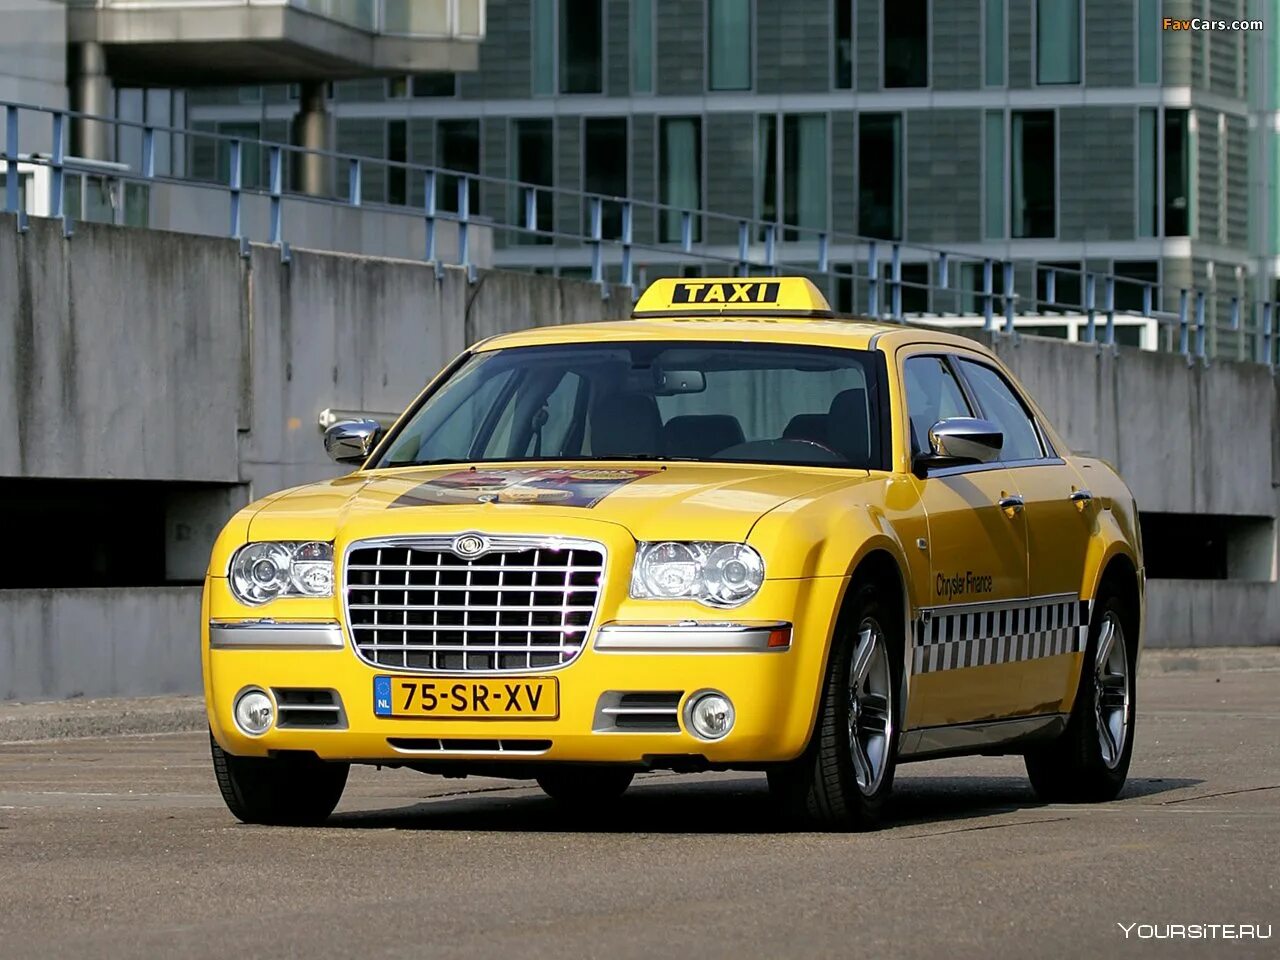 Фото такси машин. Chrysler 300c Taxi. Крайслер КЭБ. Машина "такси". Такса в машине.